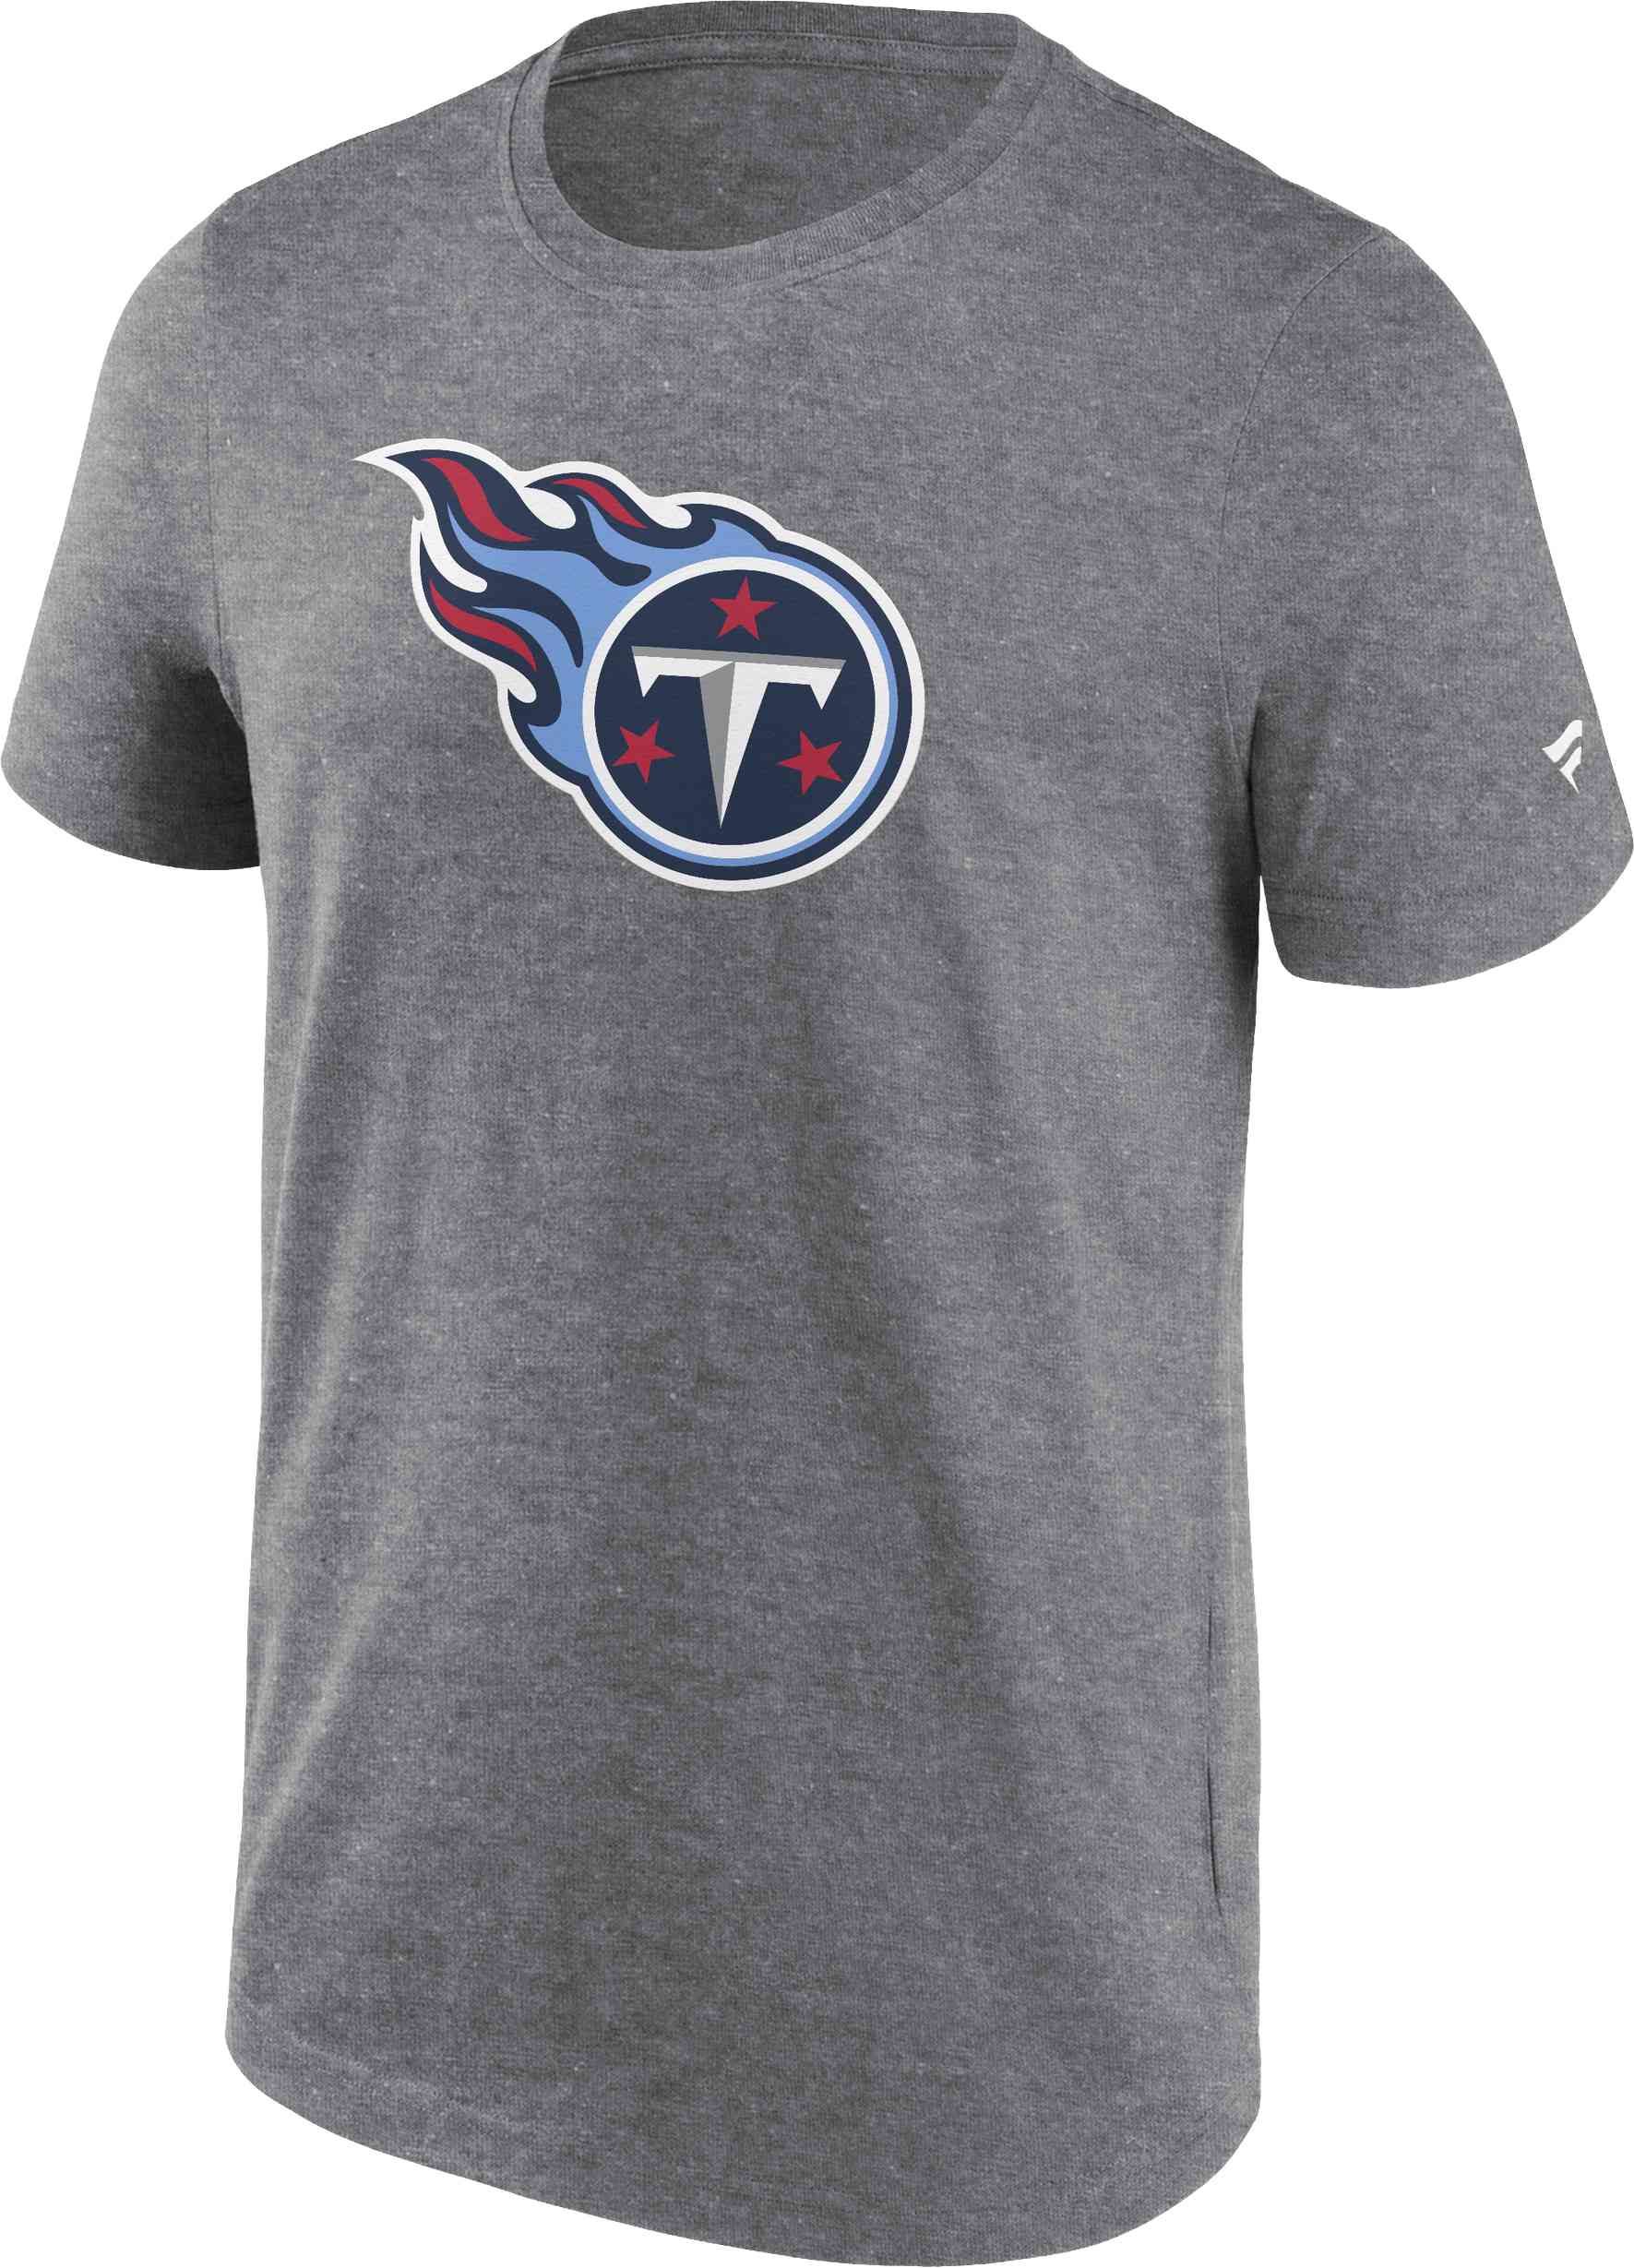 Fanatics - NFL Tennessee Titans Primary Logo Graphic T-Shirt